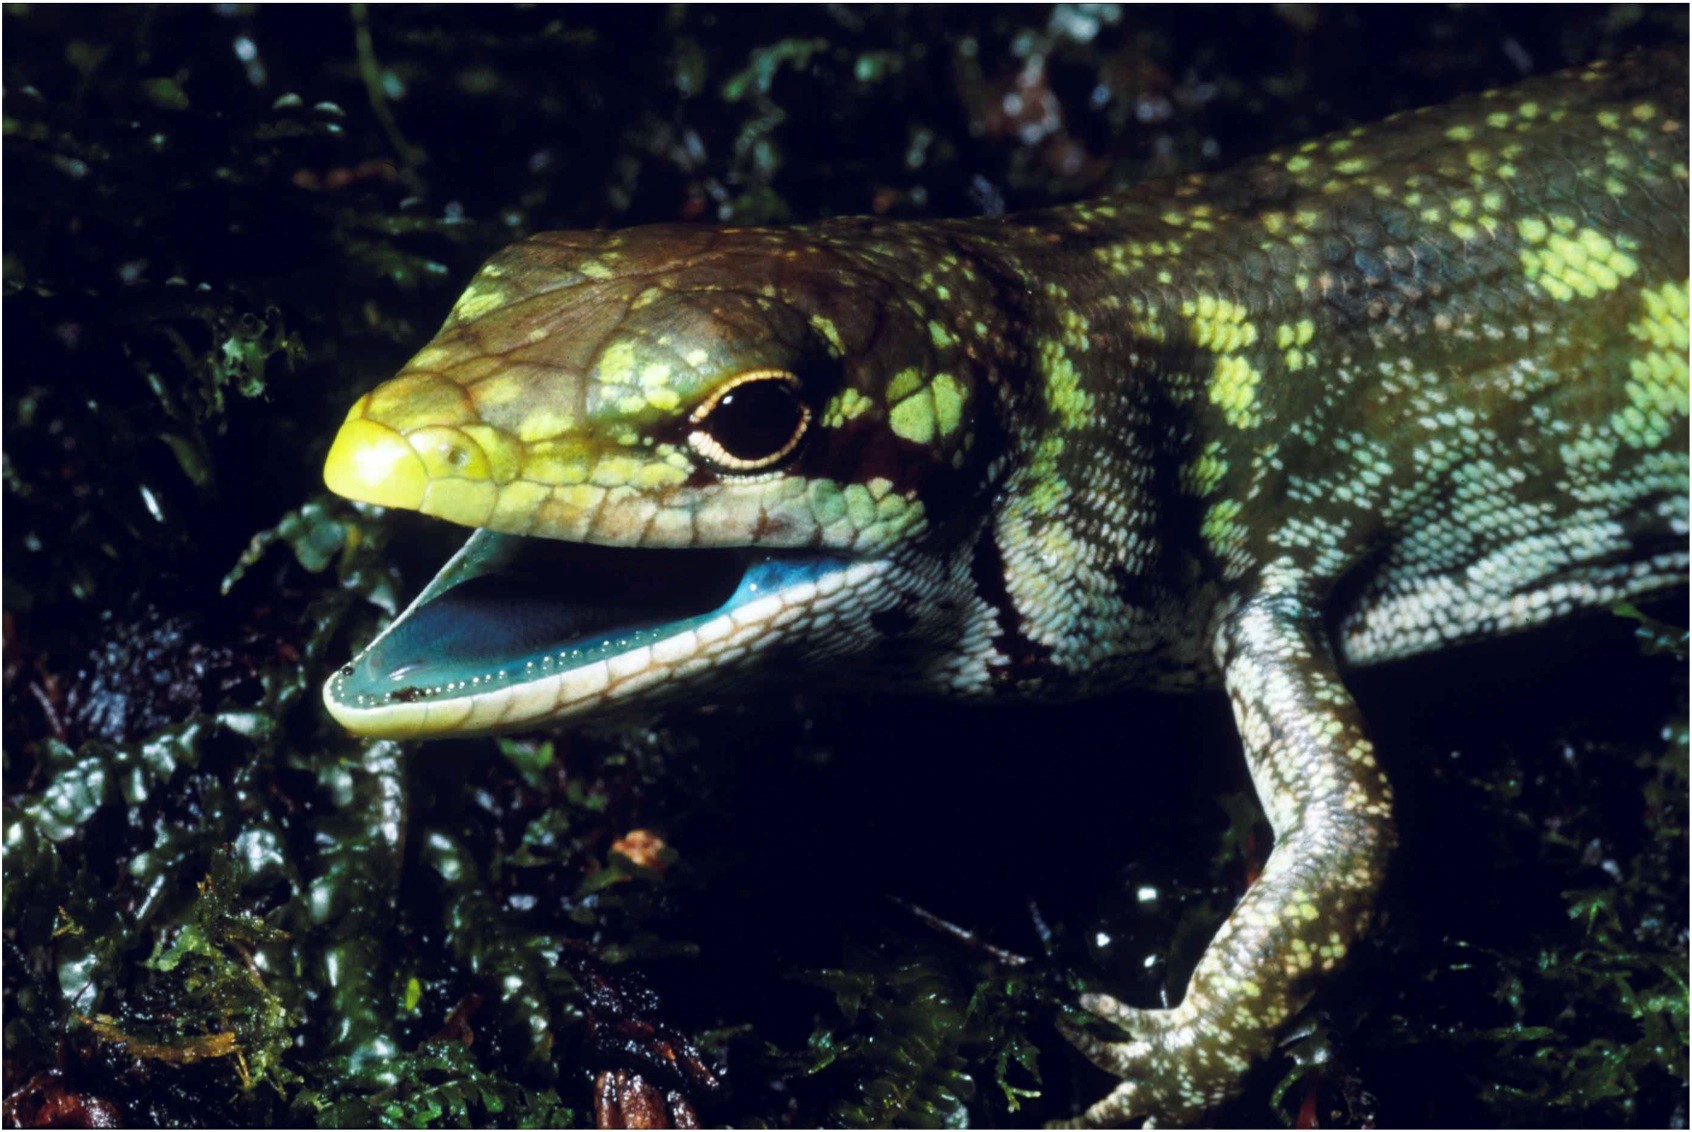 Lime-green lizard in New Guinea